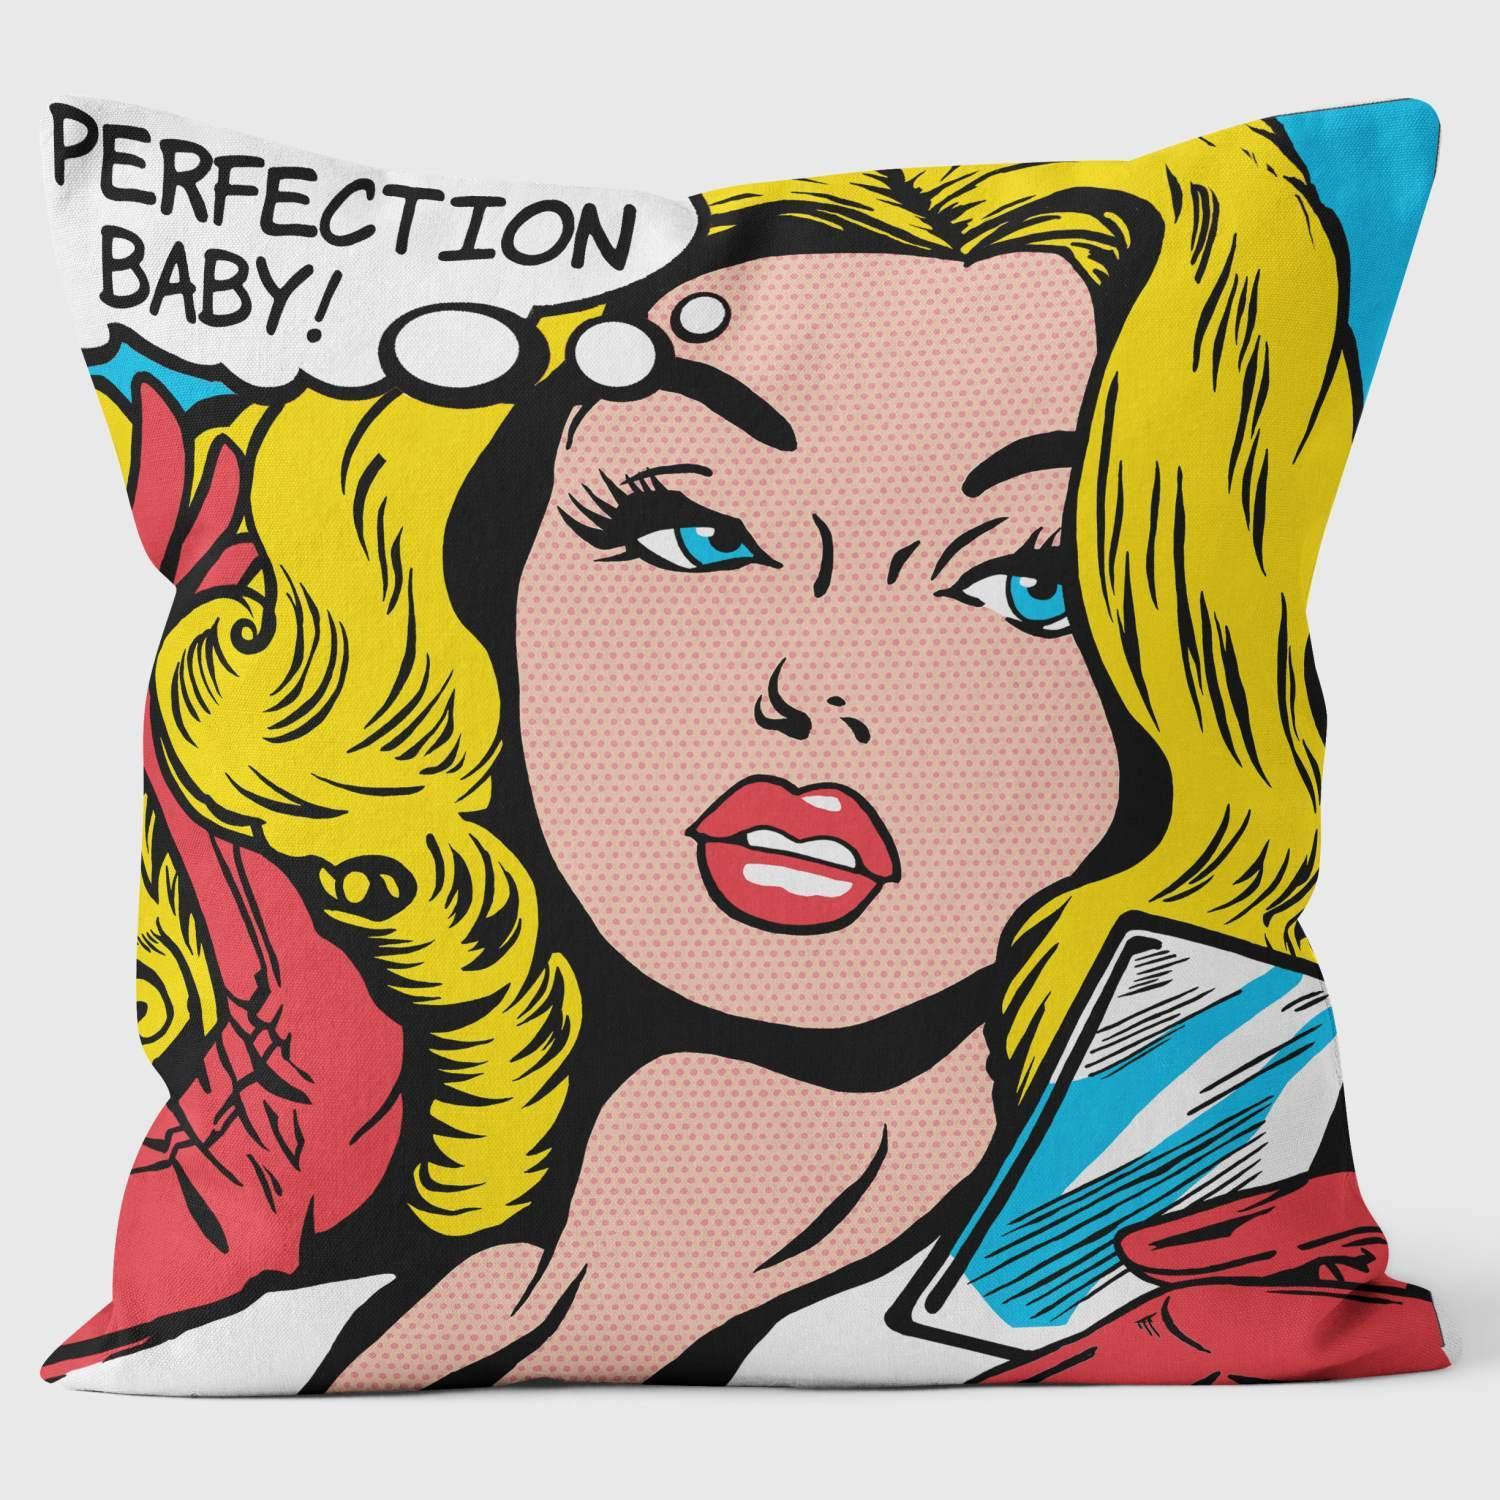 Perfection Baby - Youngerman Art Cushions - Handmade Cushions UK - WeLoveCushions